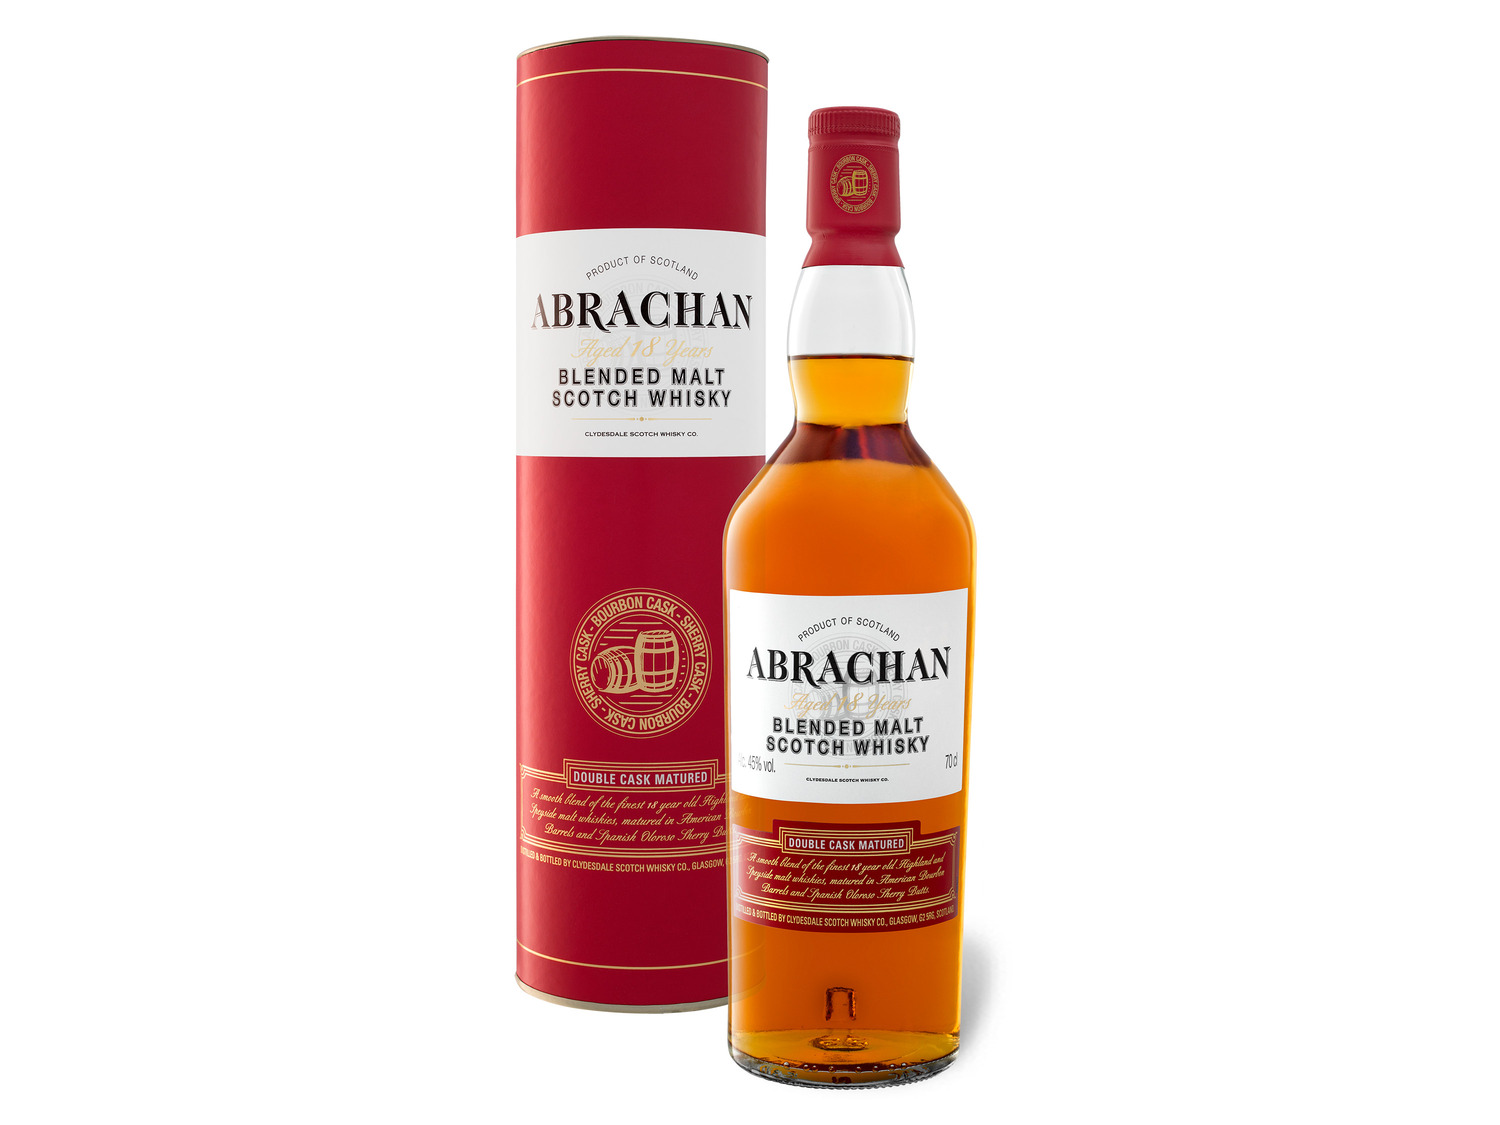 Abrachan Blended Malt Scotch Whisky 18 Jahre Double Cask Matured 45% Vol